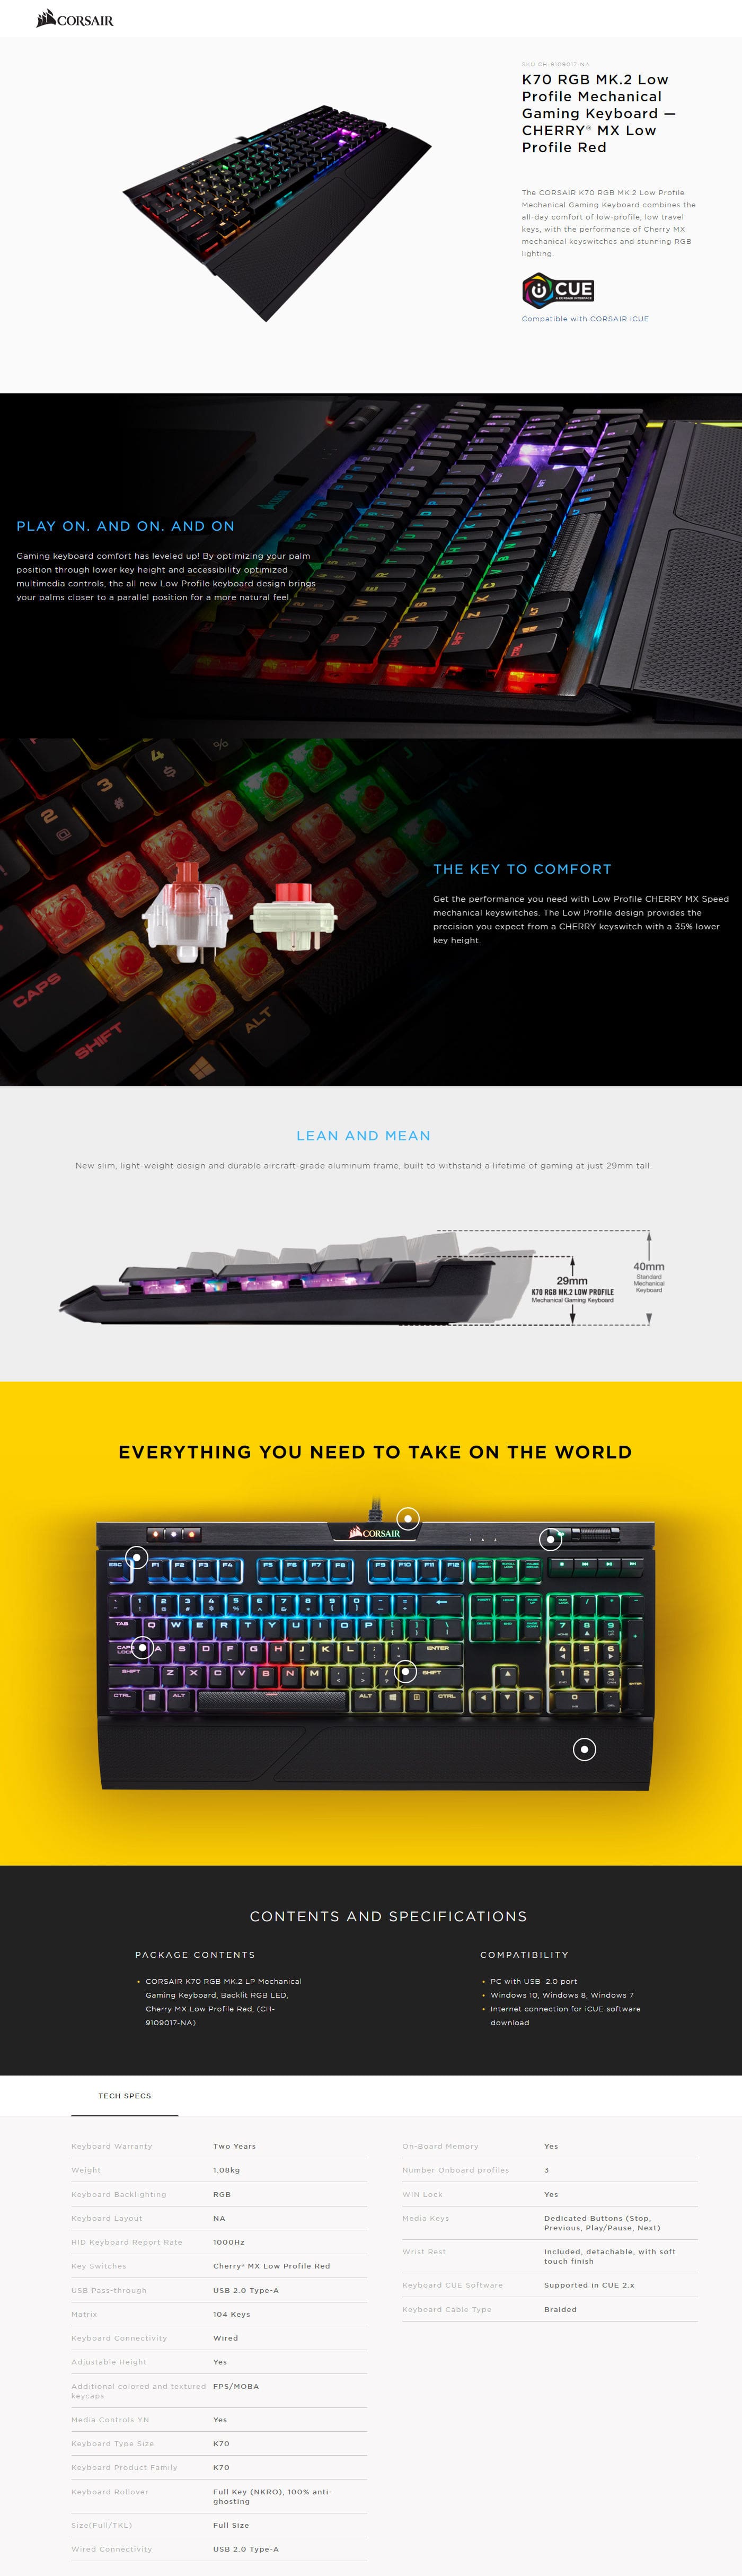  Buy Online Corsair K70 RGB MK.2 Low Profile Mechanical Gaming Keyboard - Cherry MX Low Profile Red (CH-9109017-NA)